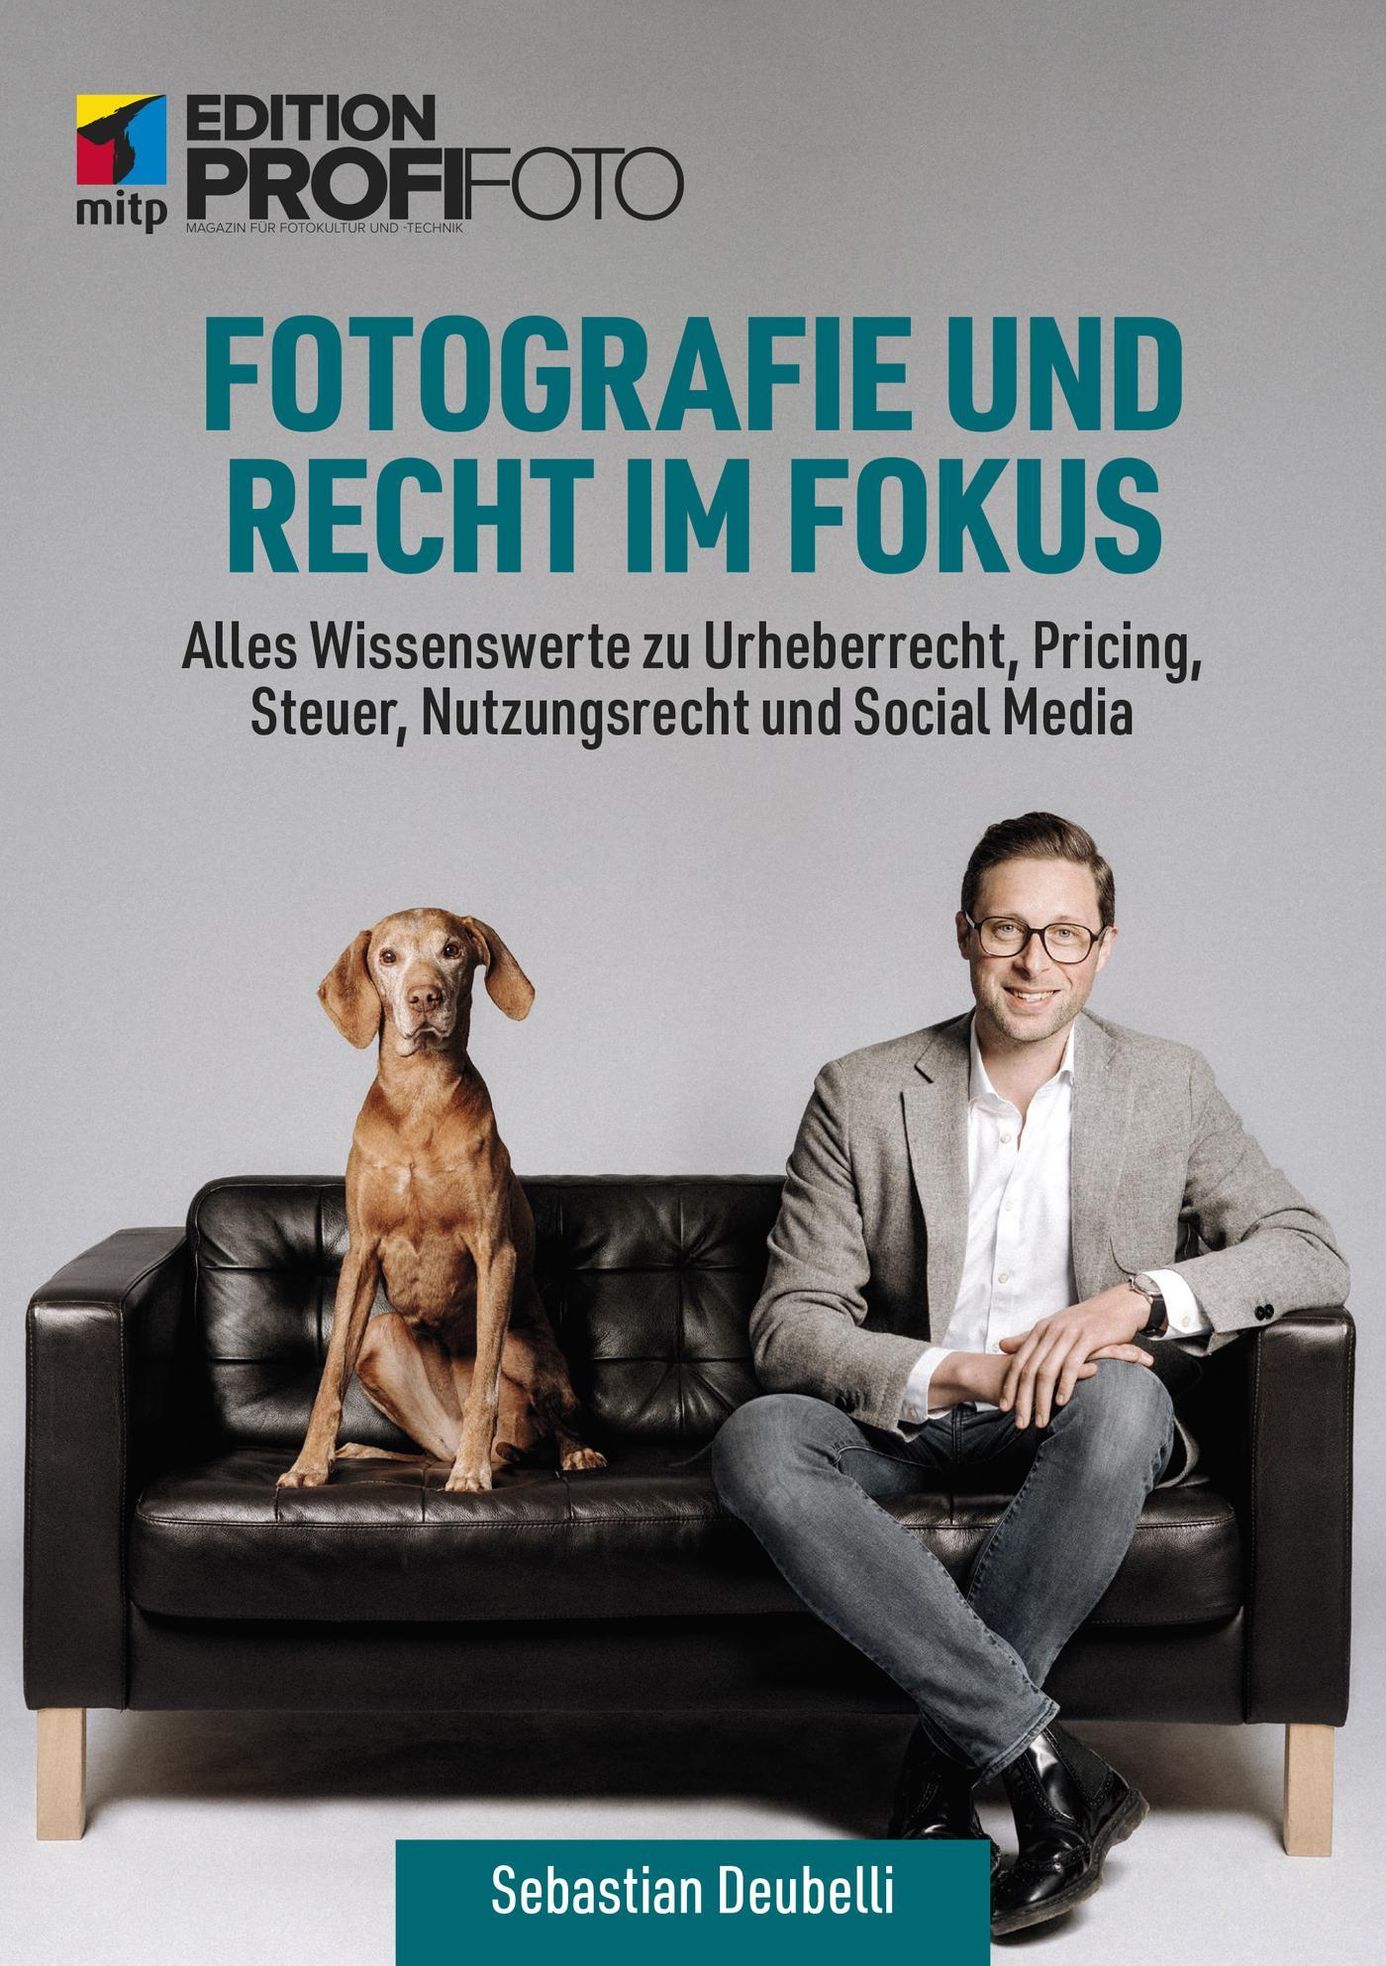 Fotografie und Recht im Fokus mitp Edition ProfiFoto ebook | Weltbild.de